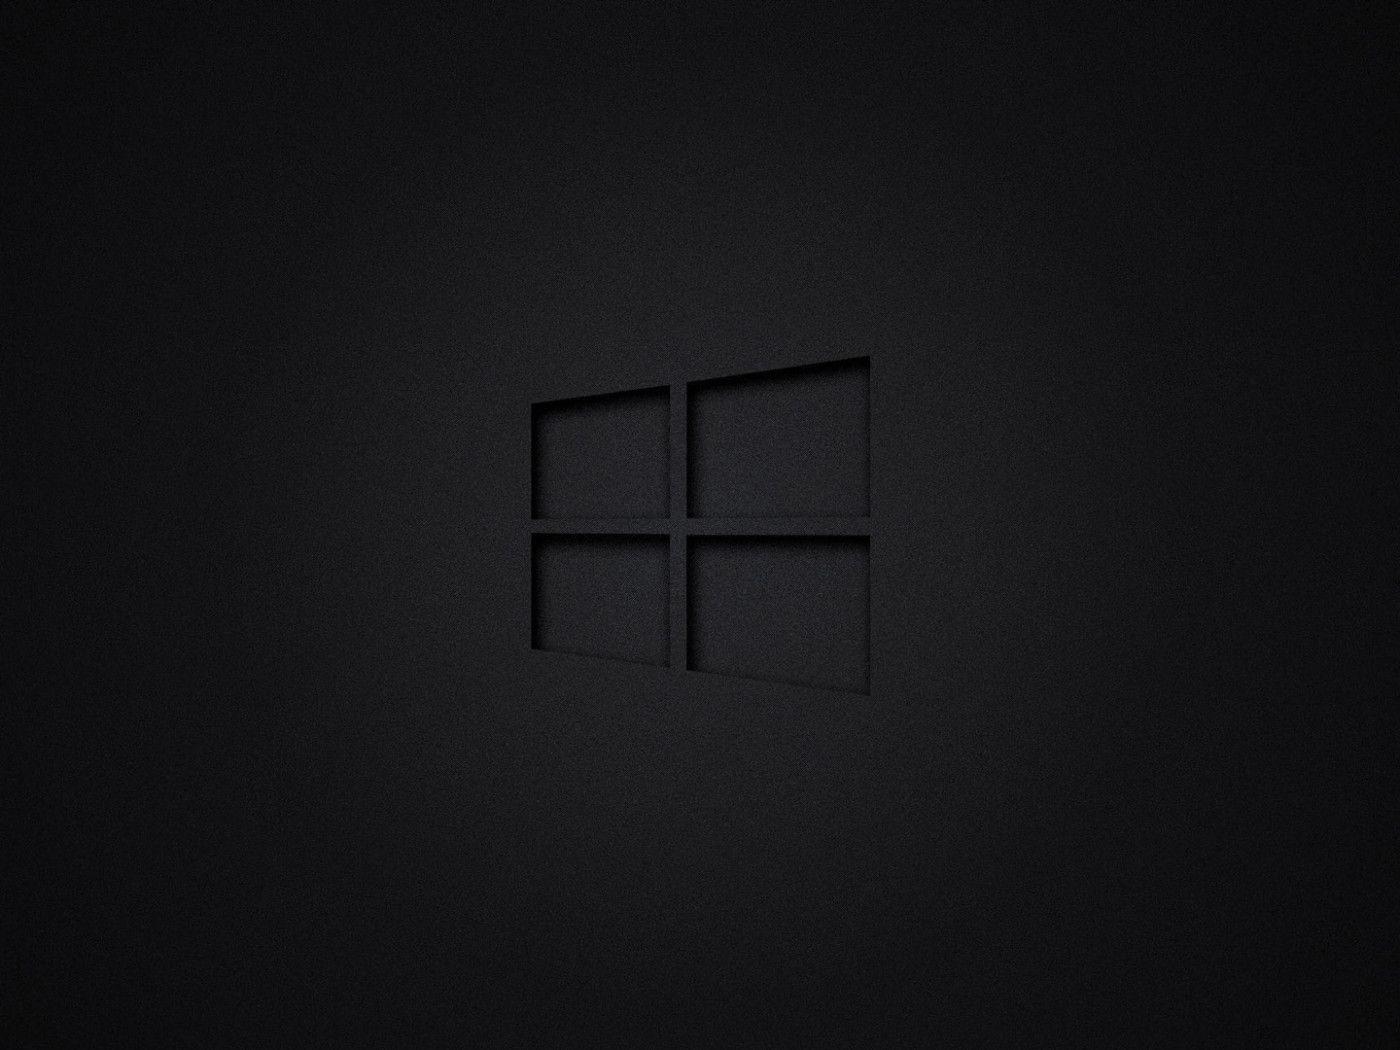 Dark Windows 10 Wallpapers Top Free Dark Windows 10 Backgrounds Wallpaperaccess